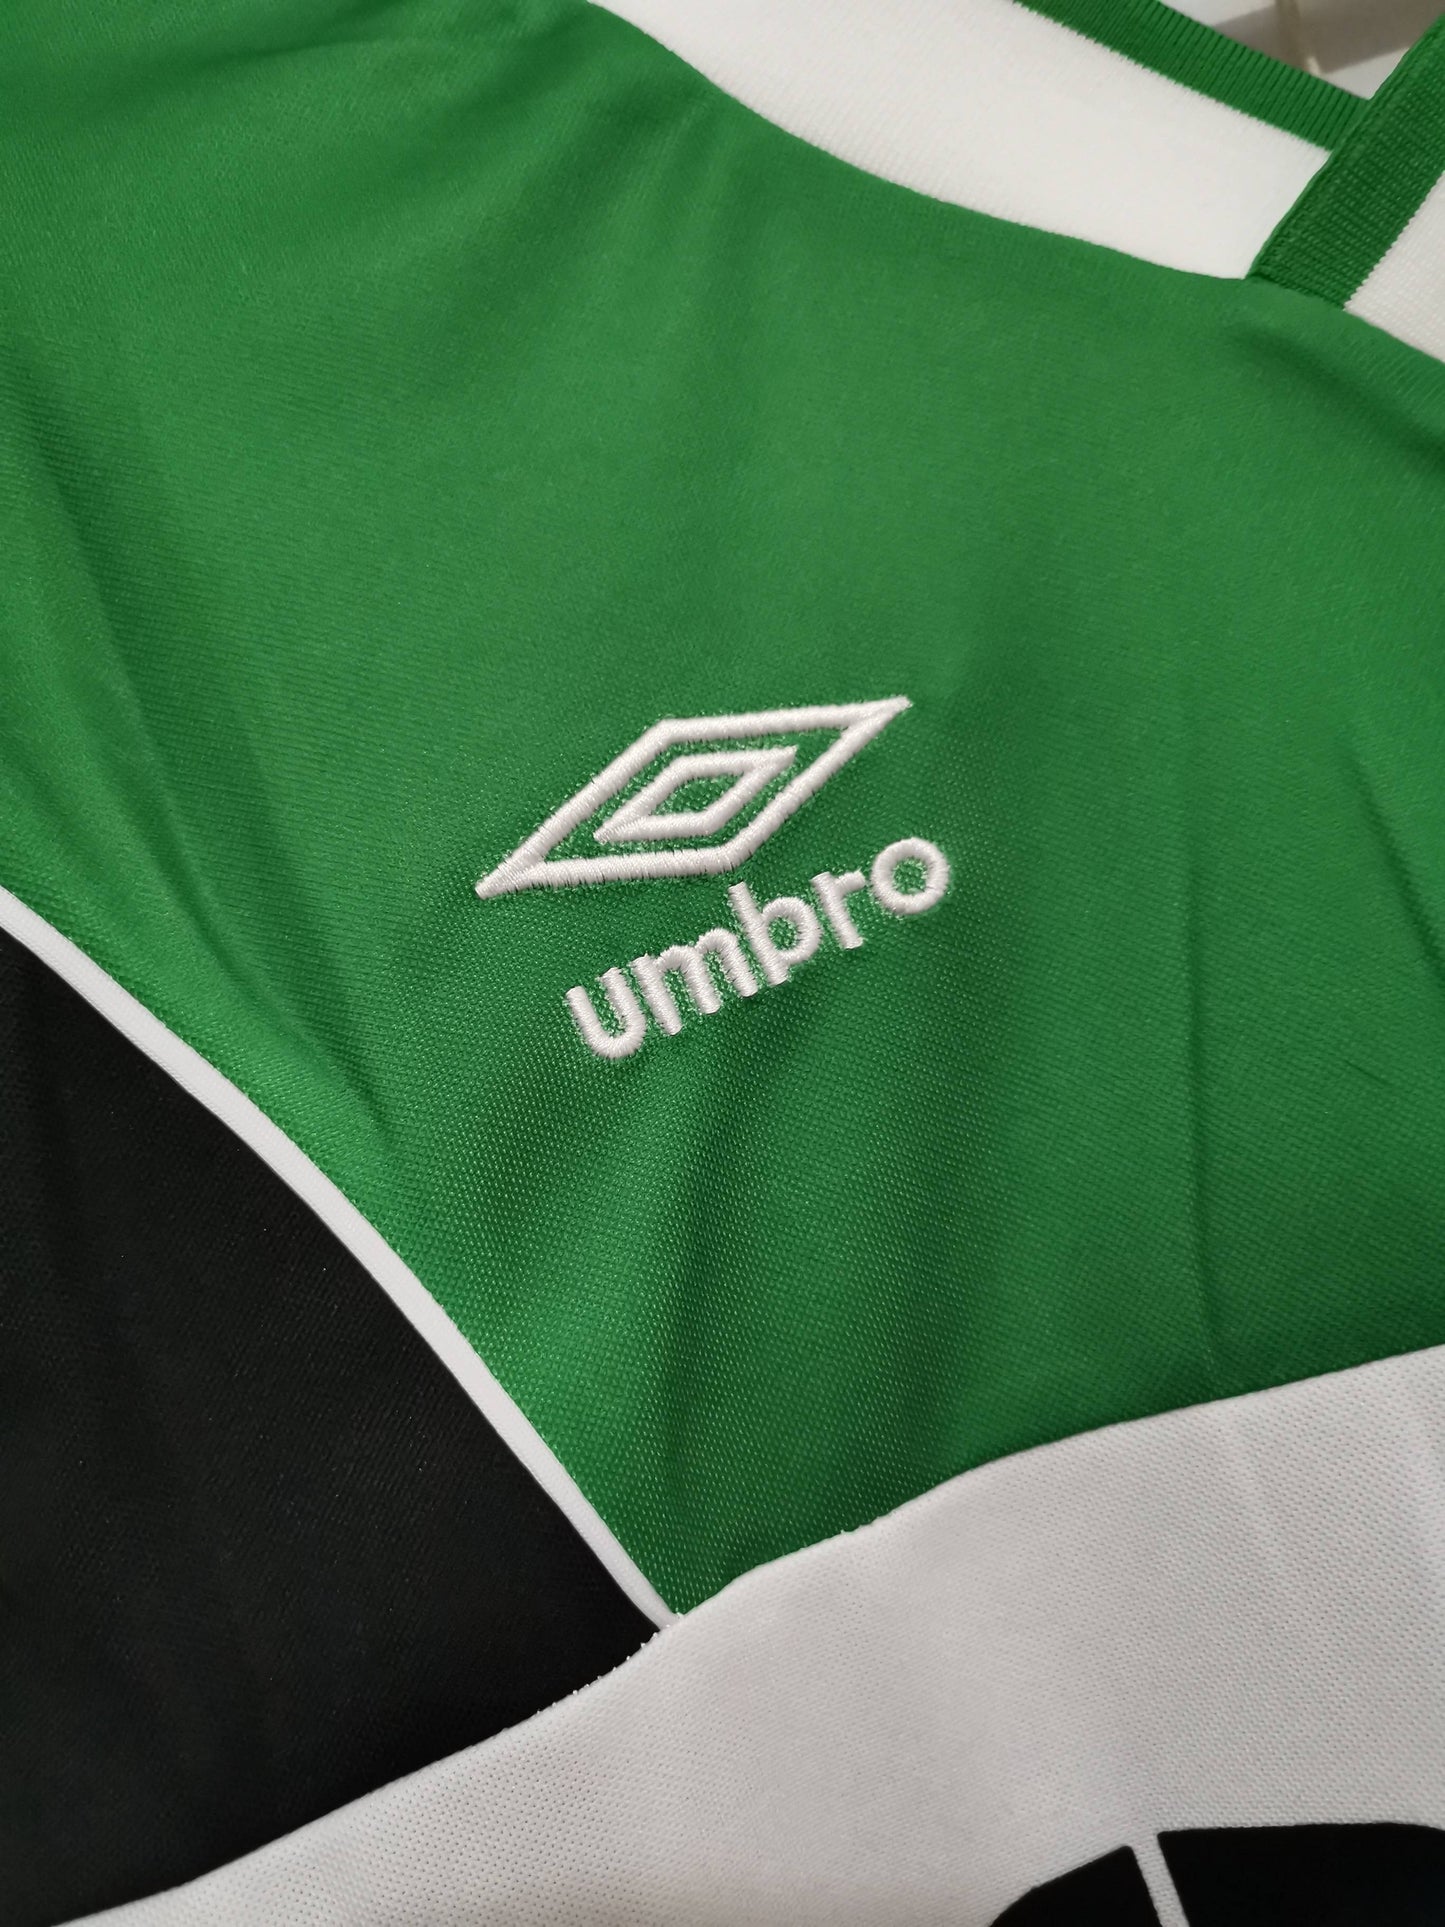 Celtic 88-89 Third Shirt